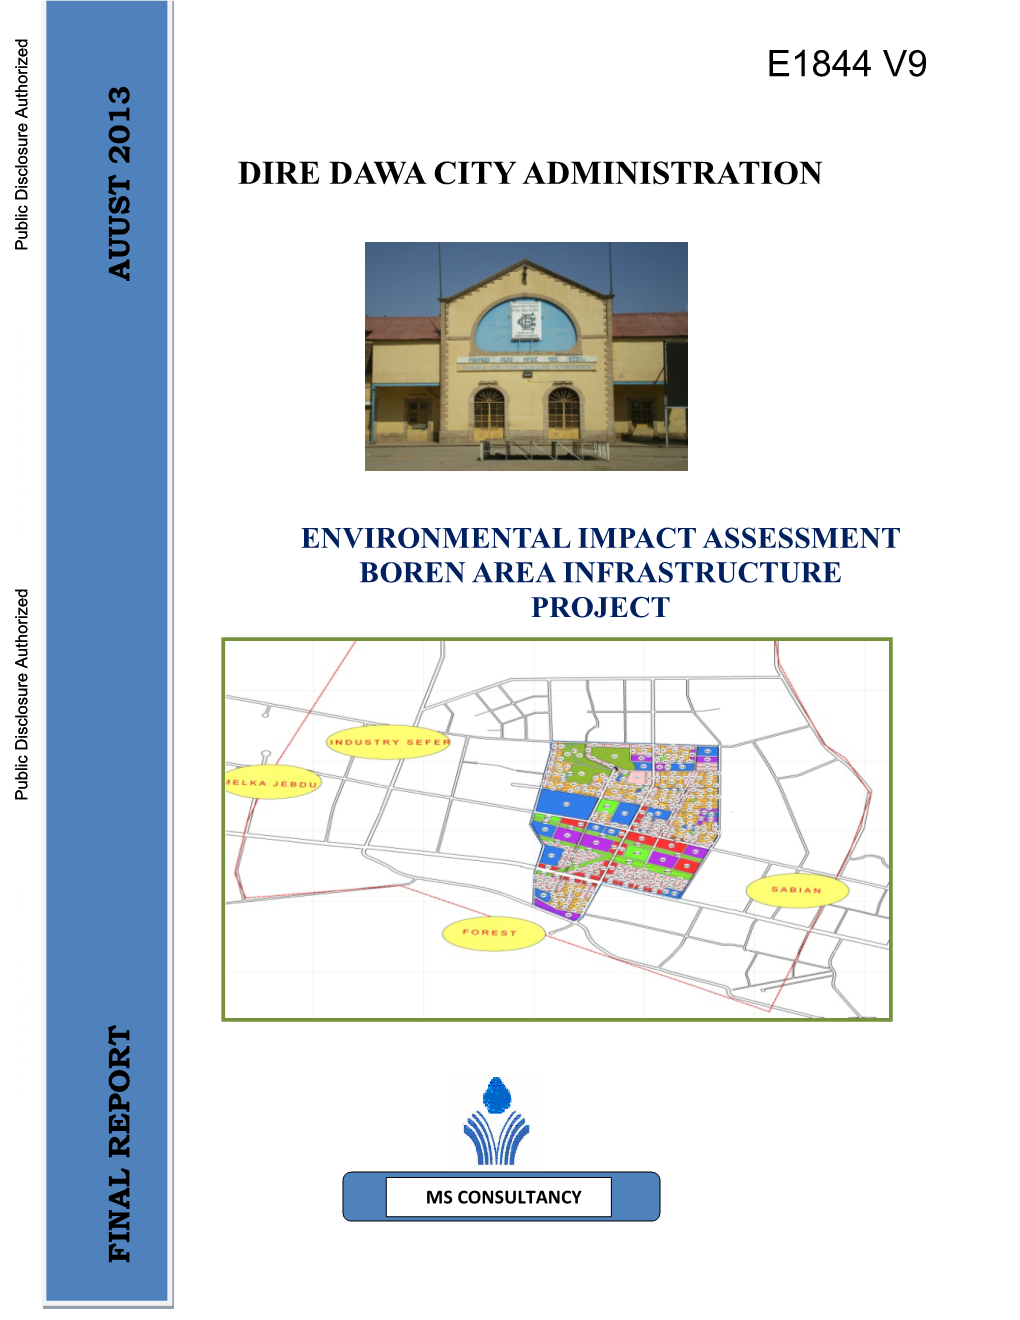 Fin Al R Ep O R T a U Us T 20 1 3 Dire Dawa City Administration Environmental Impact Assessment Boren Area Infrastructure Project